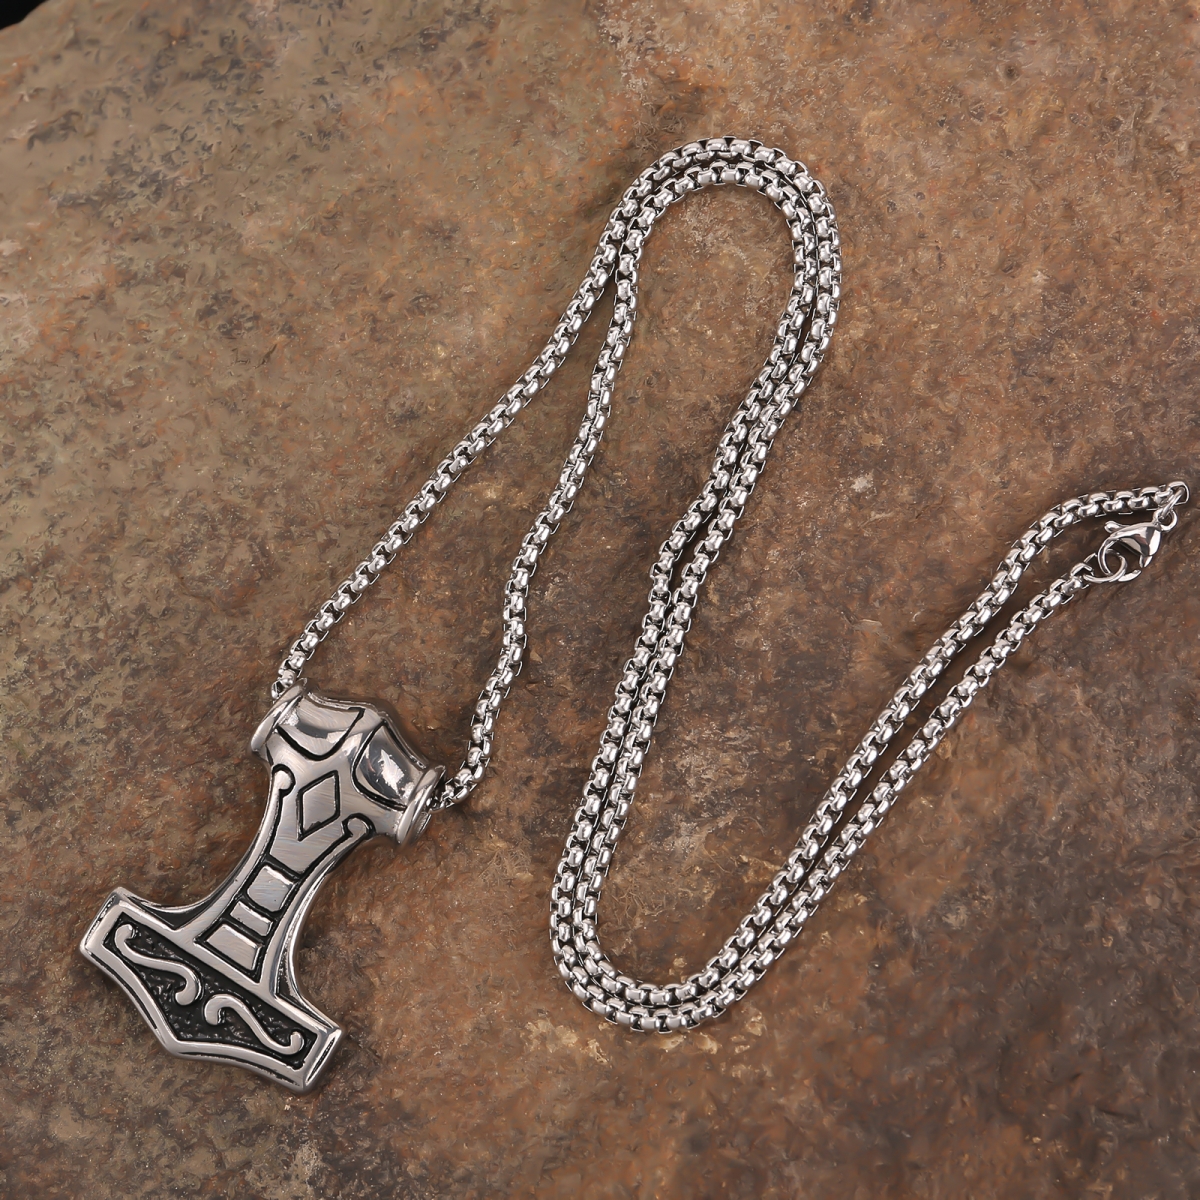 Mjolnir Necklace US$2.9/PC-NORSECOLLECTION- Viking Jewelry,Viking Necklace,Viking Bracelet,Viking Rings,Viking Mugs,Viking Accessories,Viking Crafts